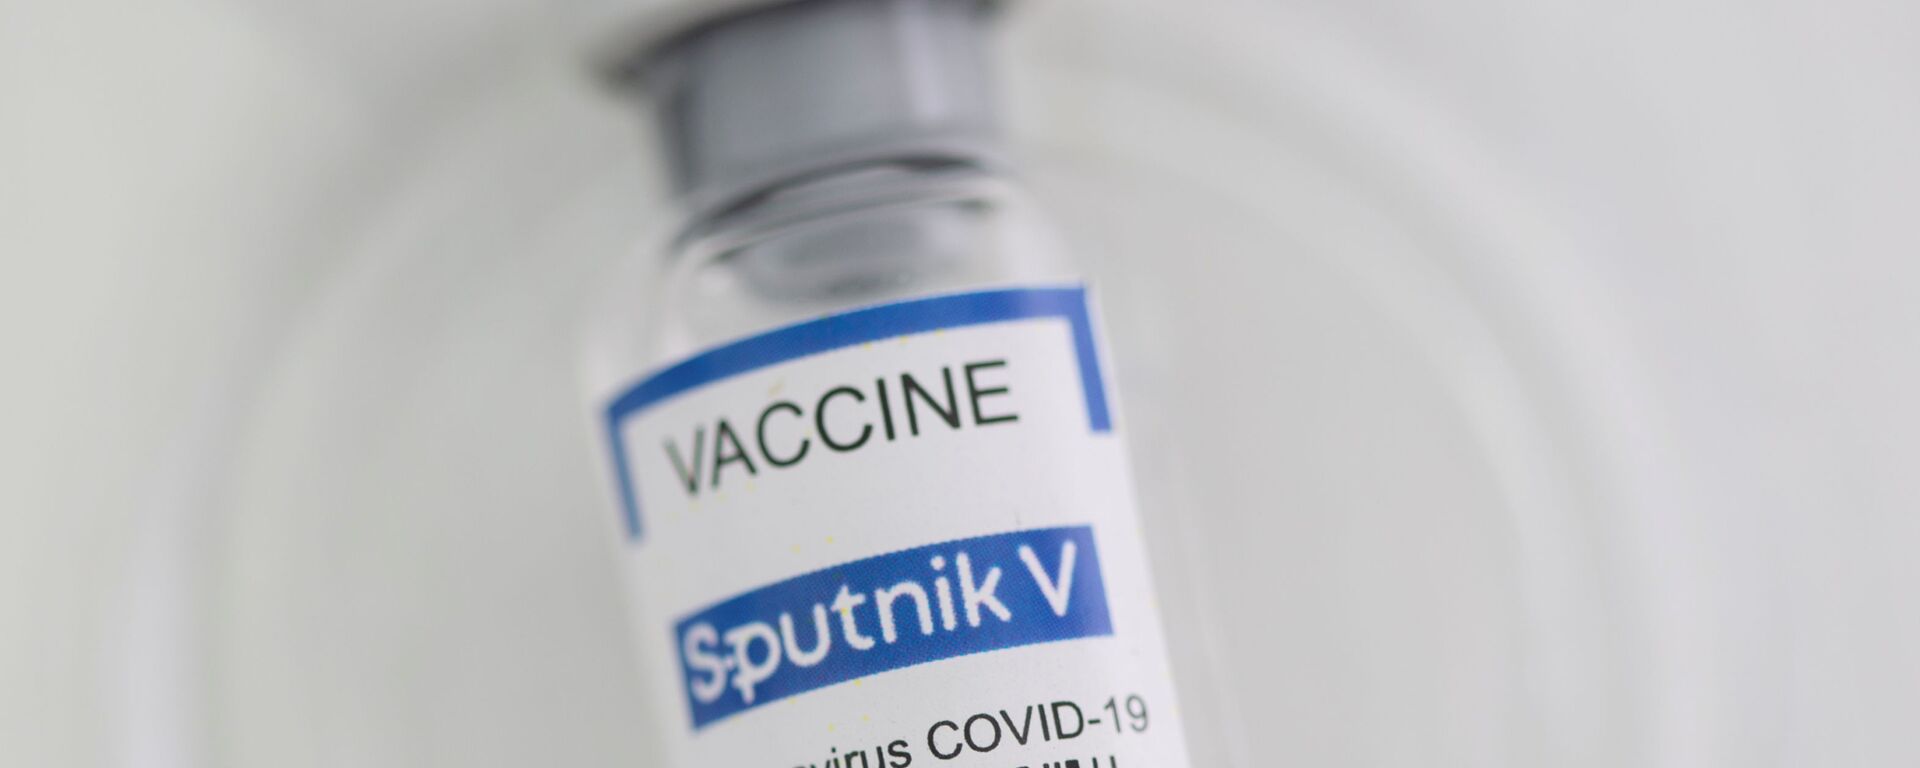 A vial labelled Sputnik V coronavirus disease (COVID-19) vaccine is seen in this illustration picture taken on 2 May 2021. - Sputnik International, 1920, 13.10.2021